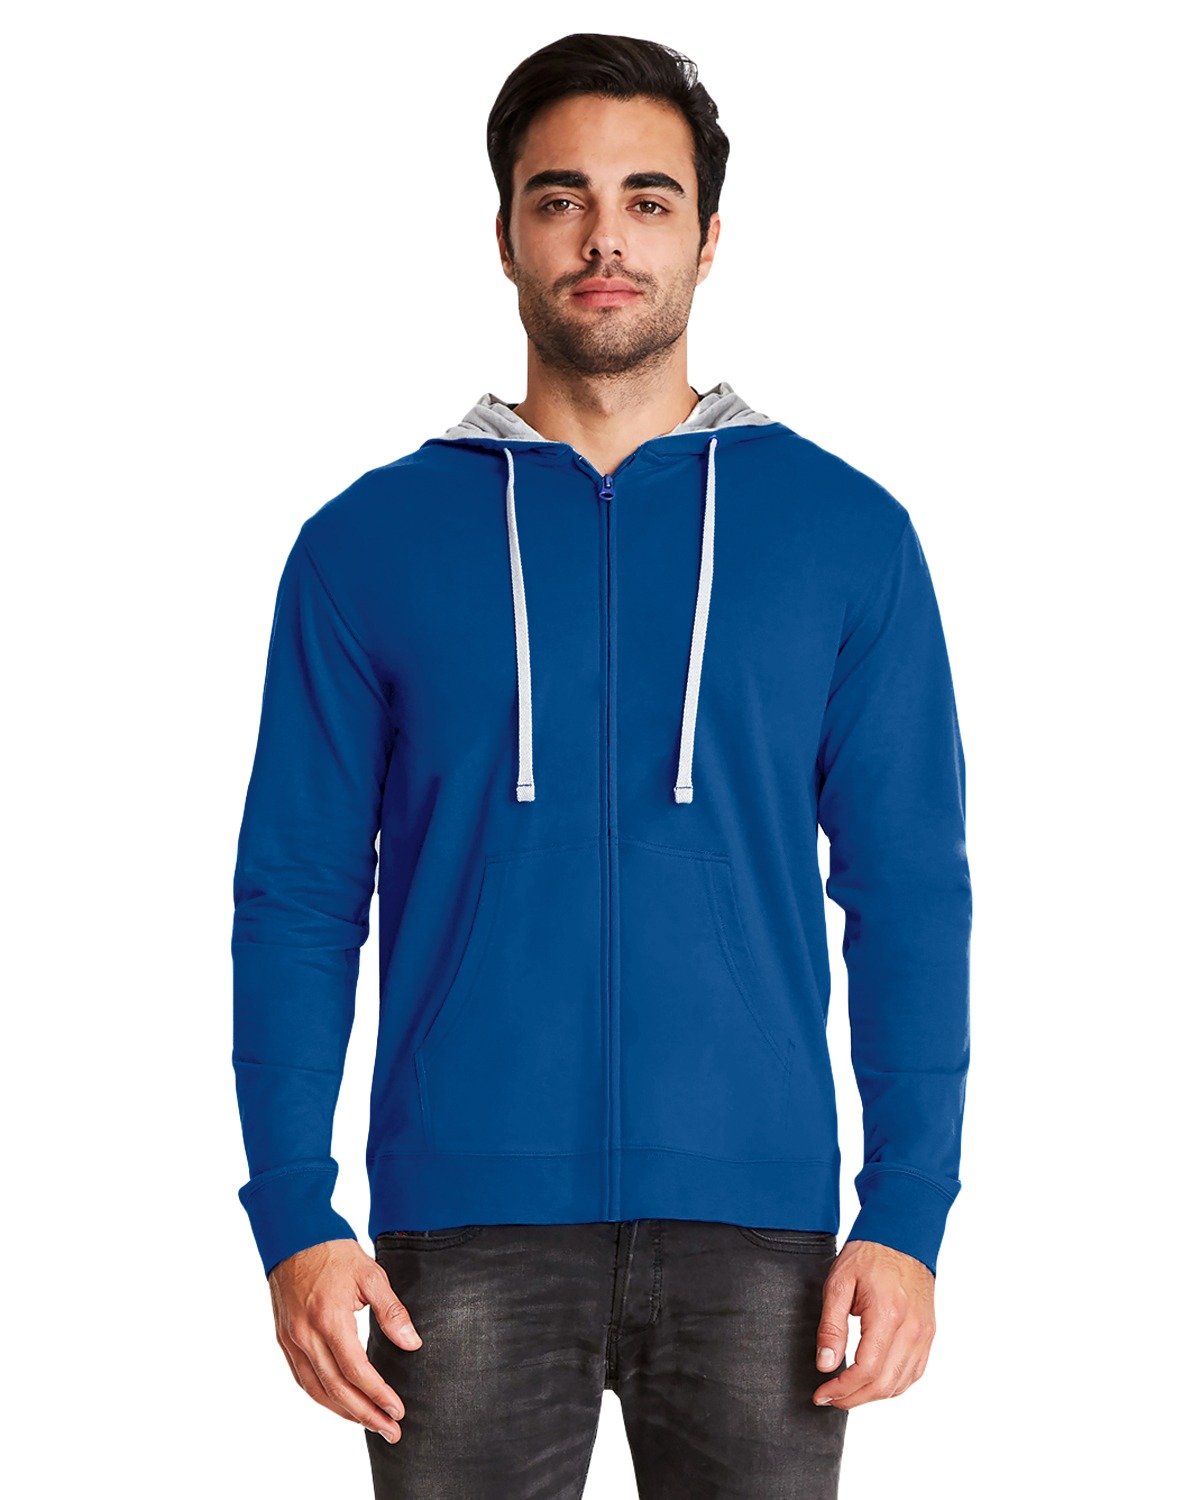 Next Level Adult Laguna French Terry Full-Zip Hooded Sweatshirt ROYAL/ HTHR GRAY 